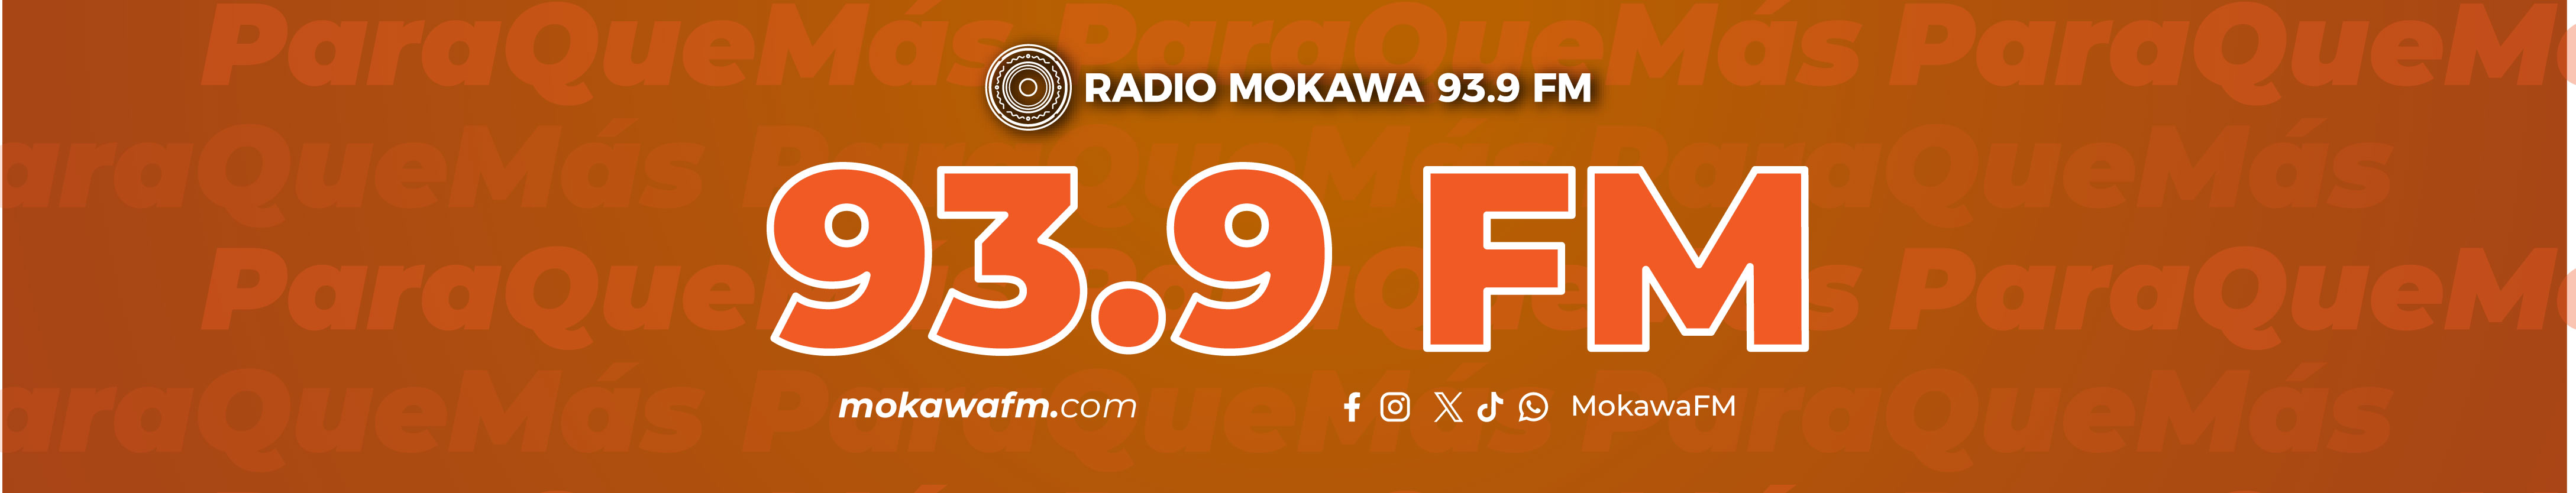 MOKAWA FM 93.9